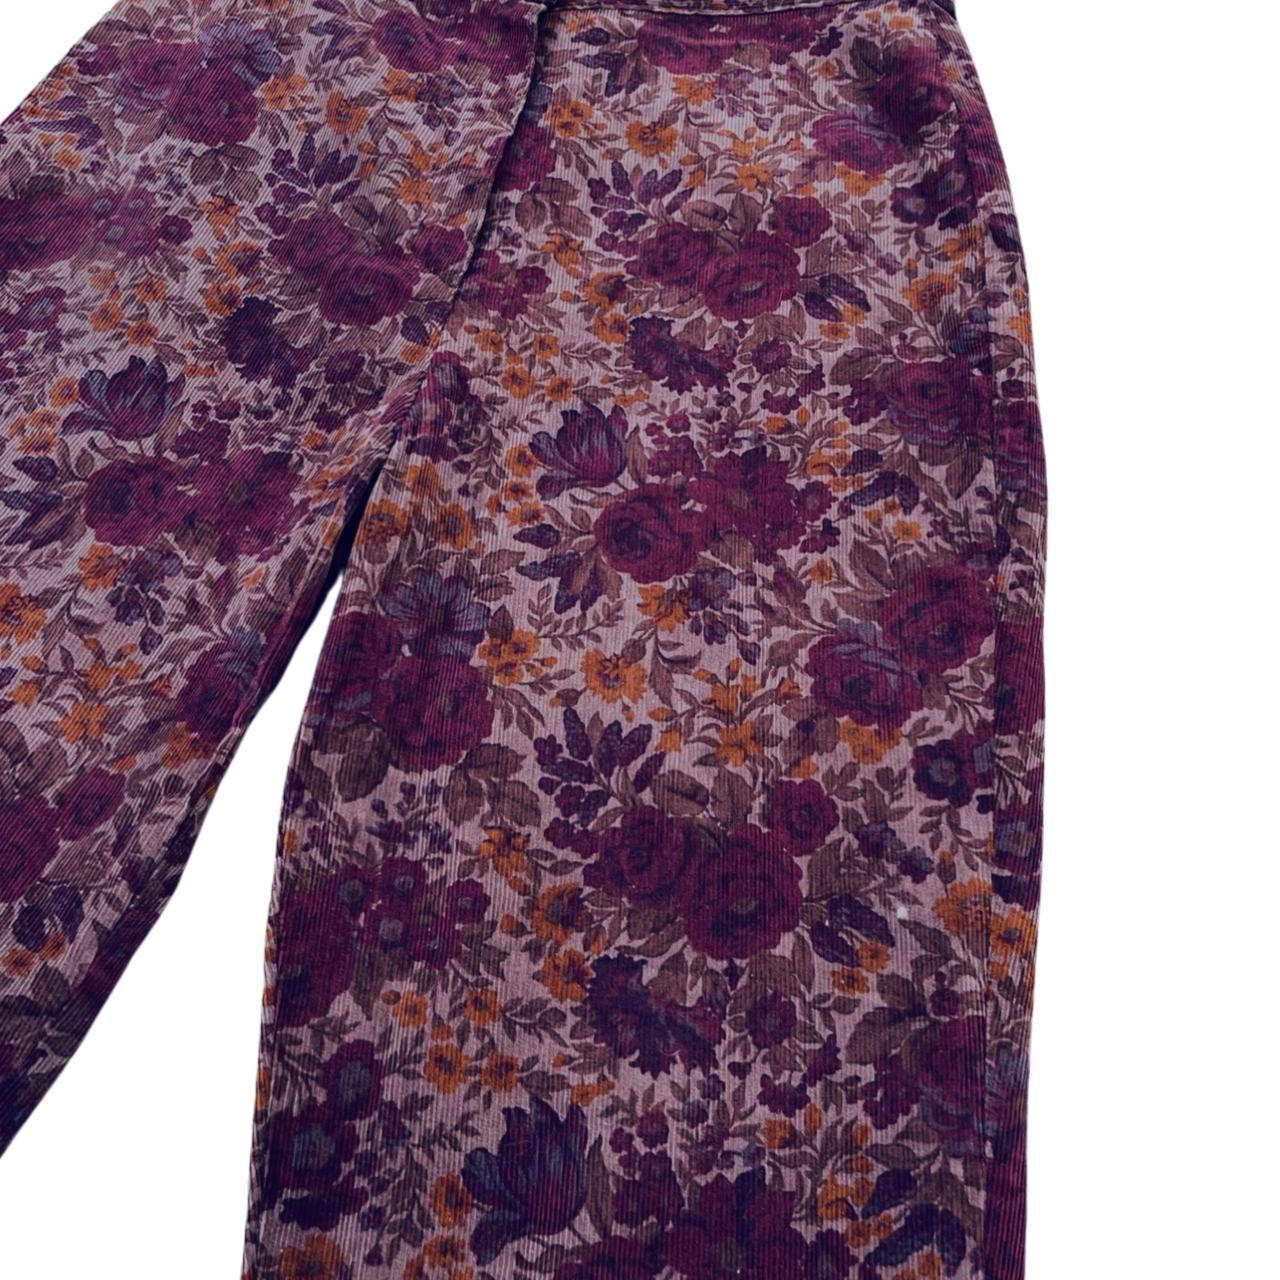 Cord Cordroy Floral Purple Vintage Paisley Grey... - Depop